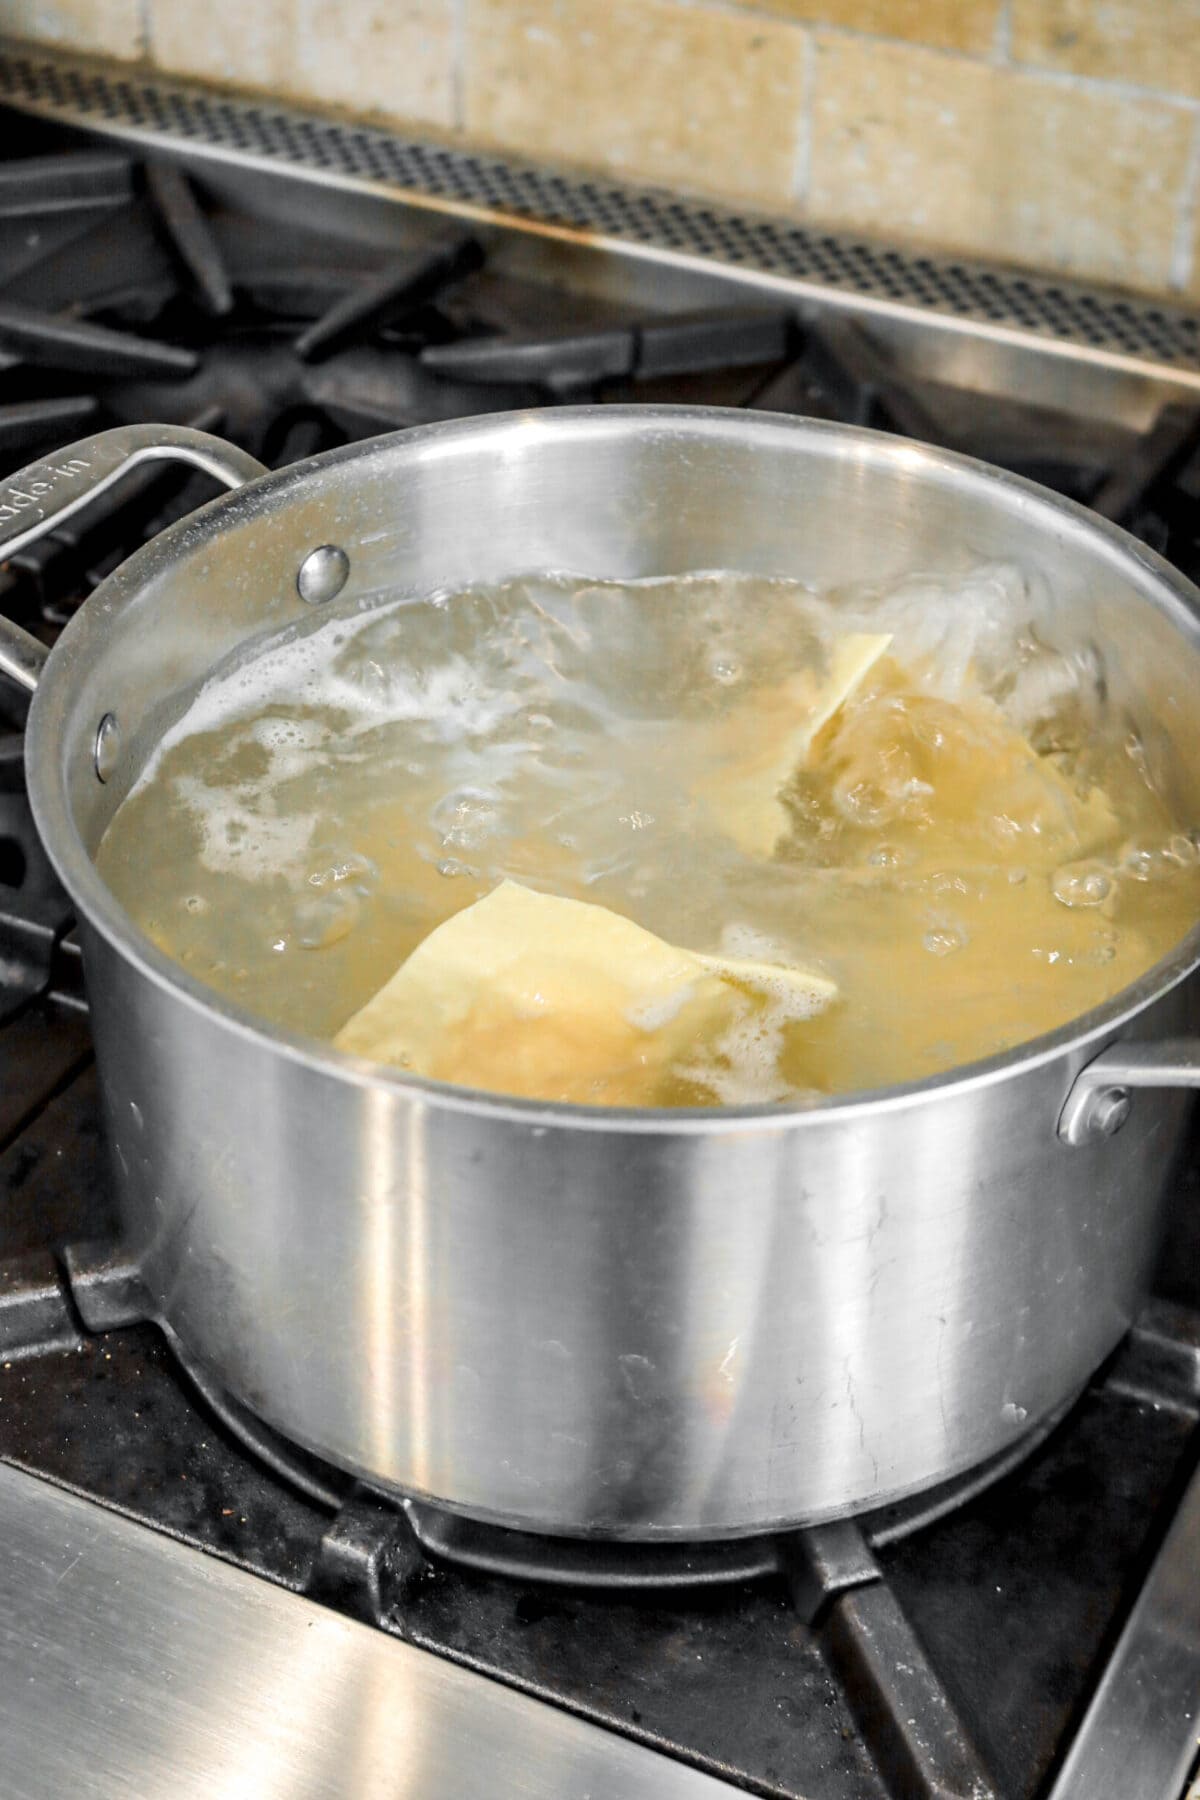 ravioli boiling in large pot of water.